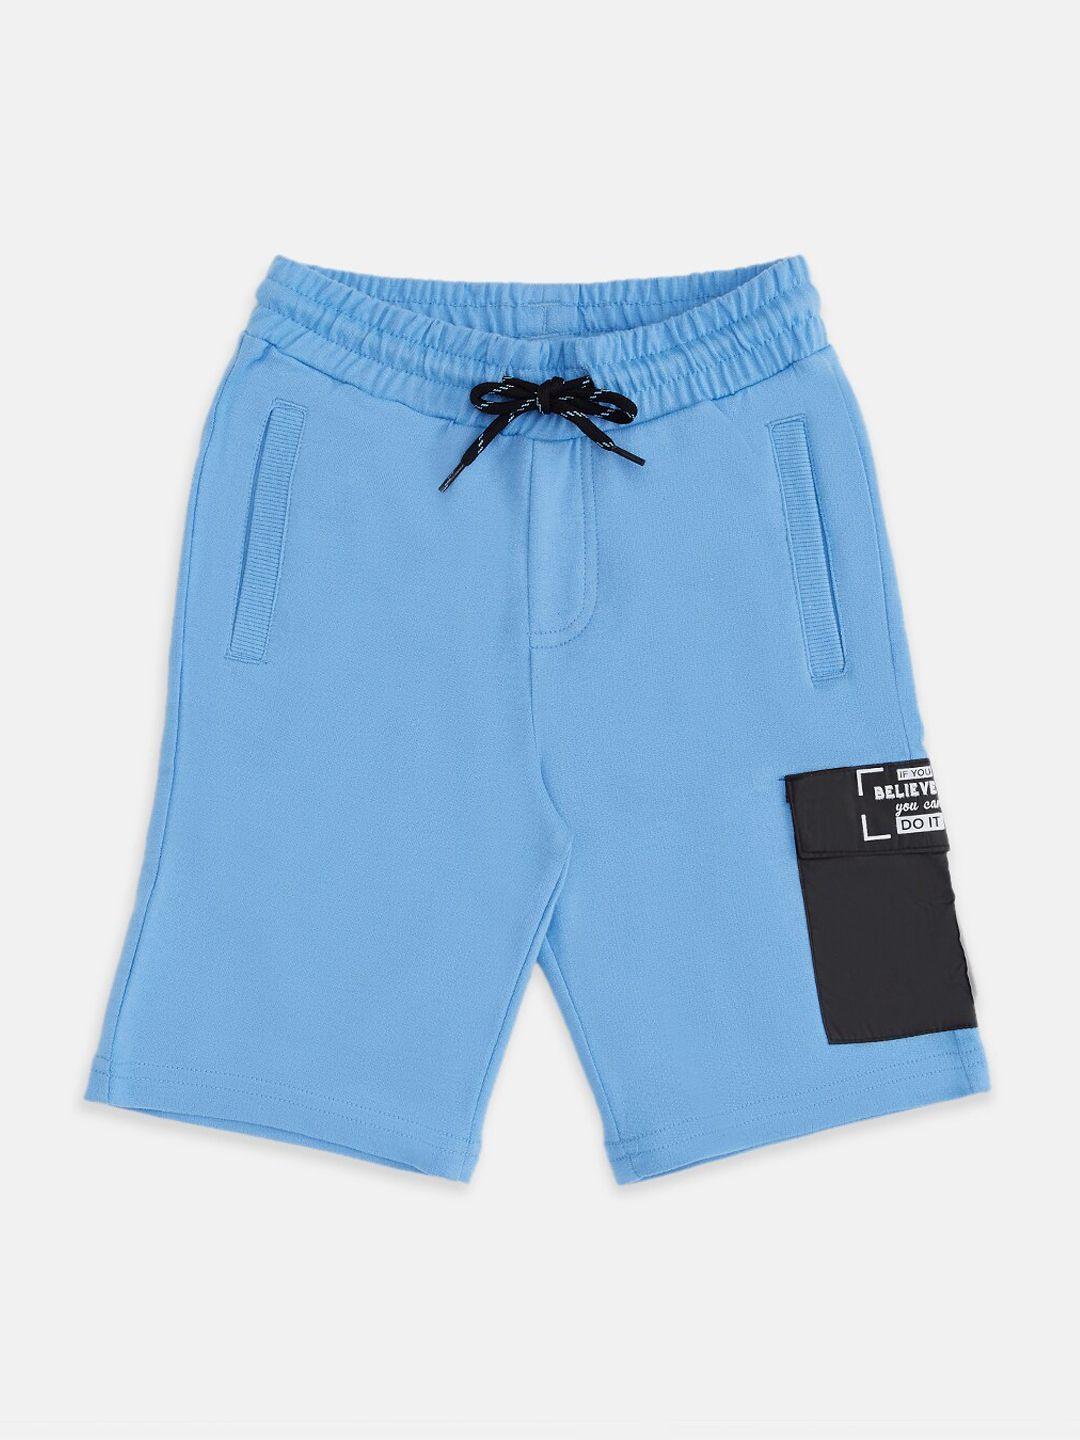 pantaloons junior boys cotton blue shorts